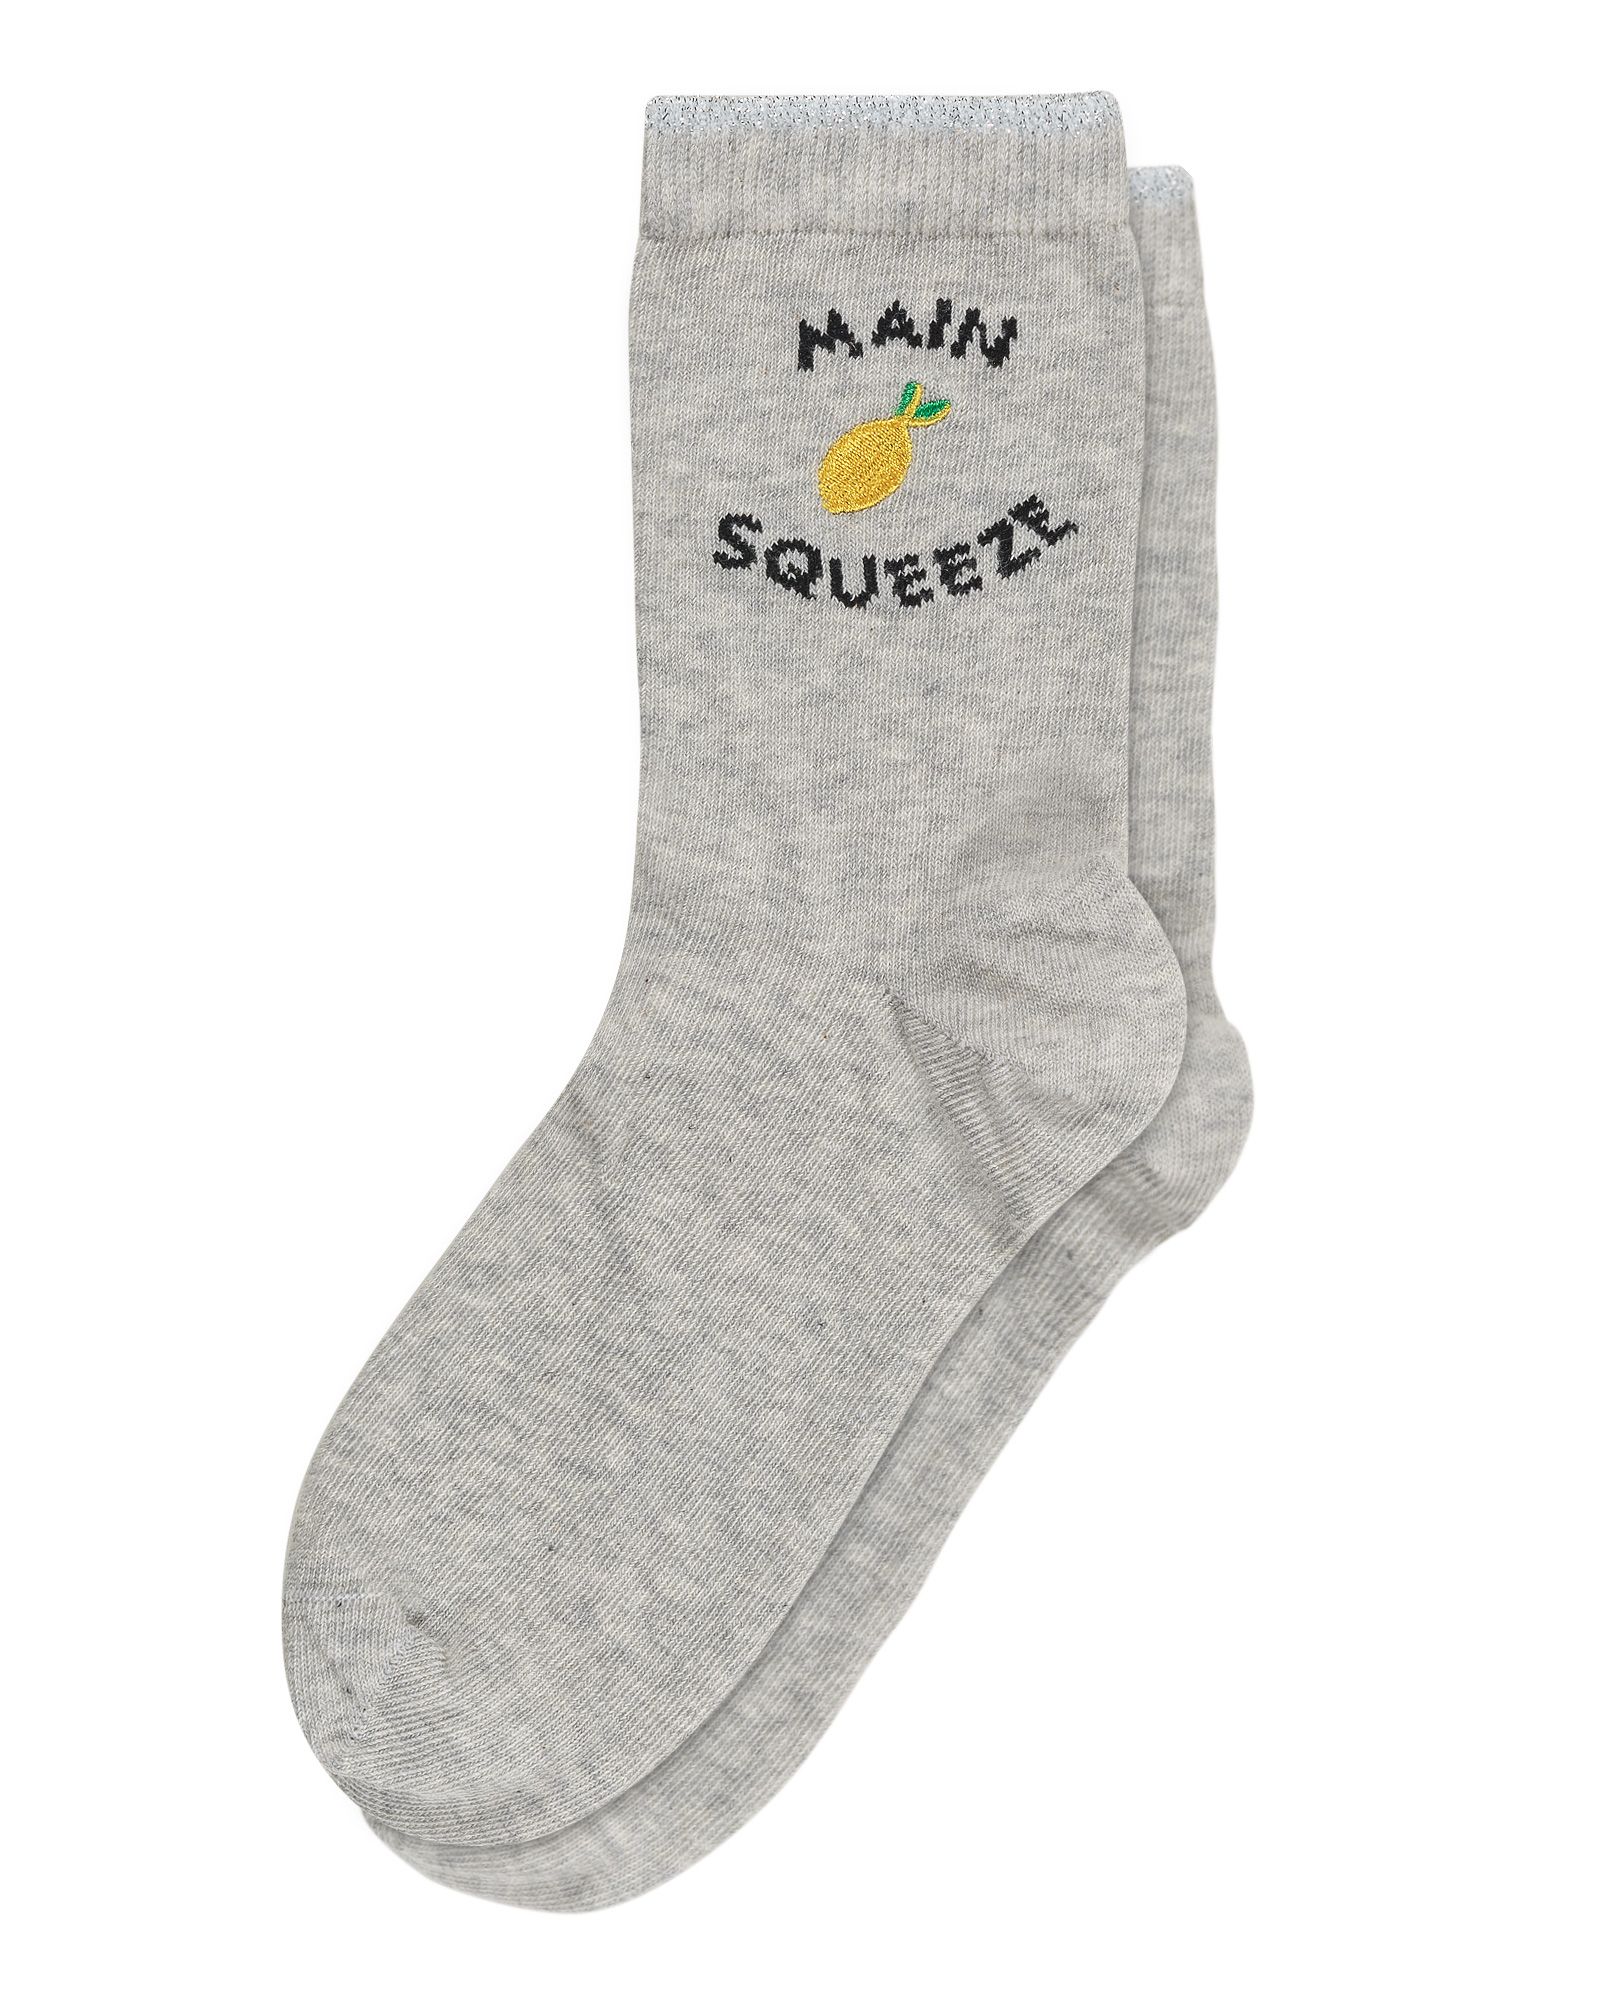 Main Squeeze Grey Socks | Oliver Bonas